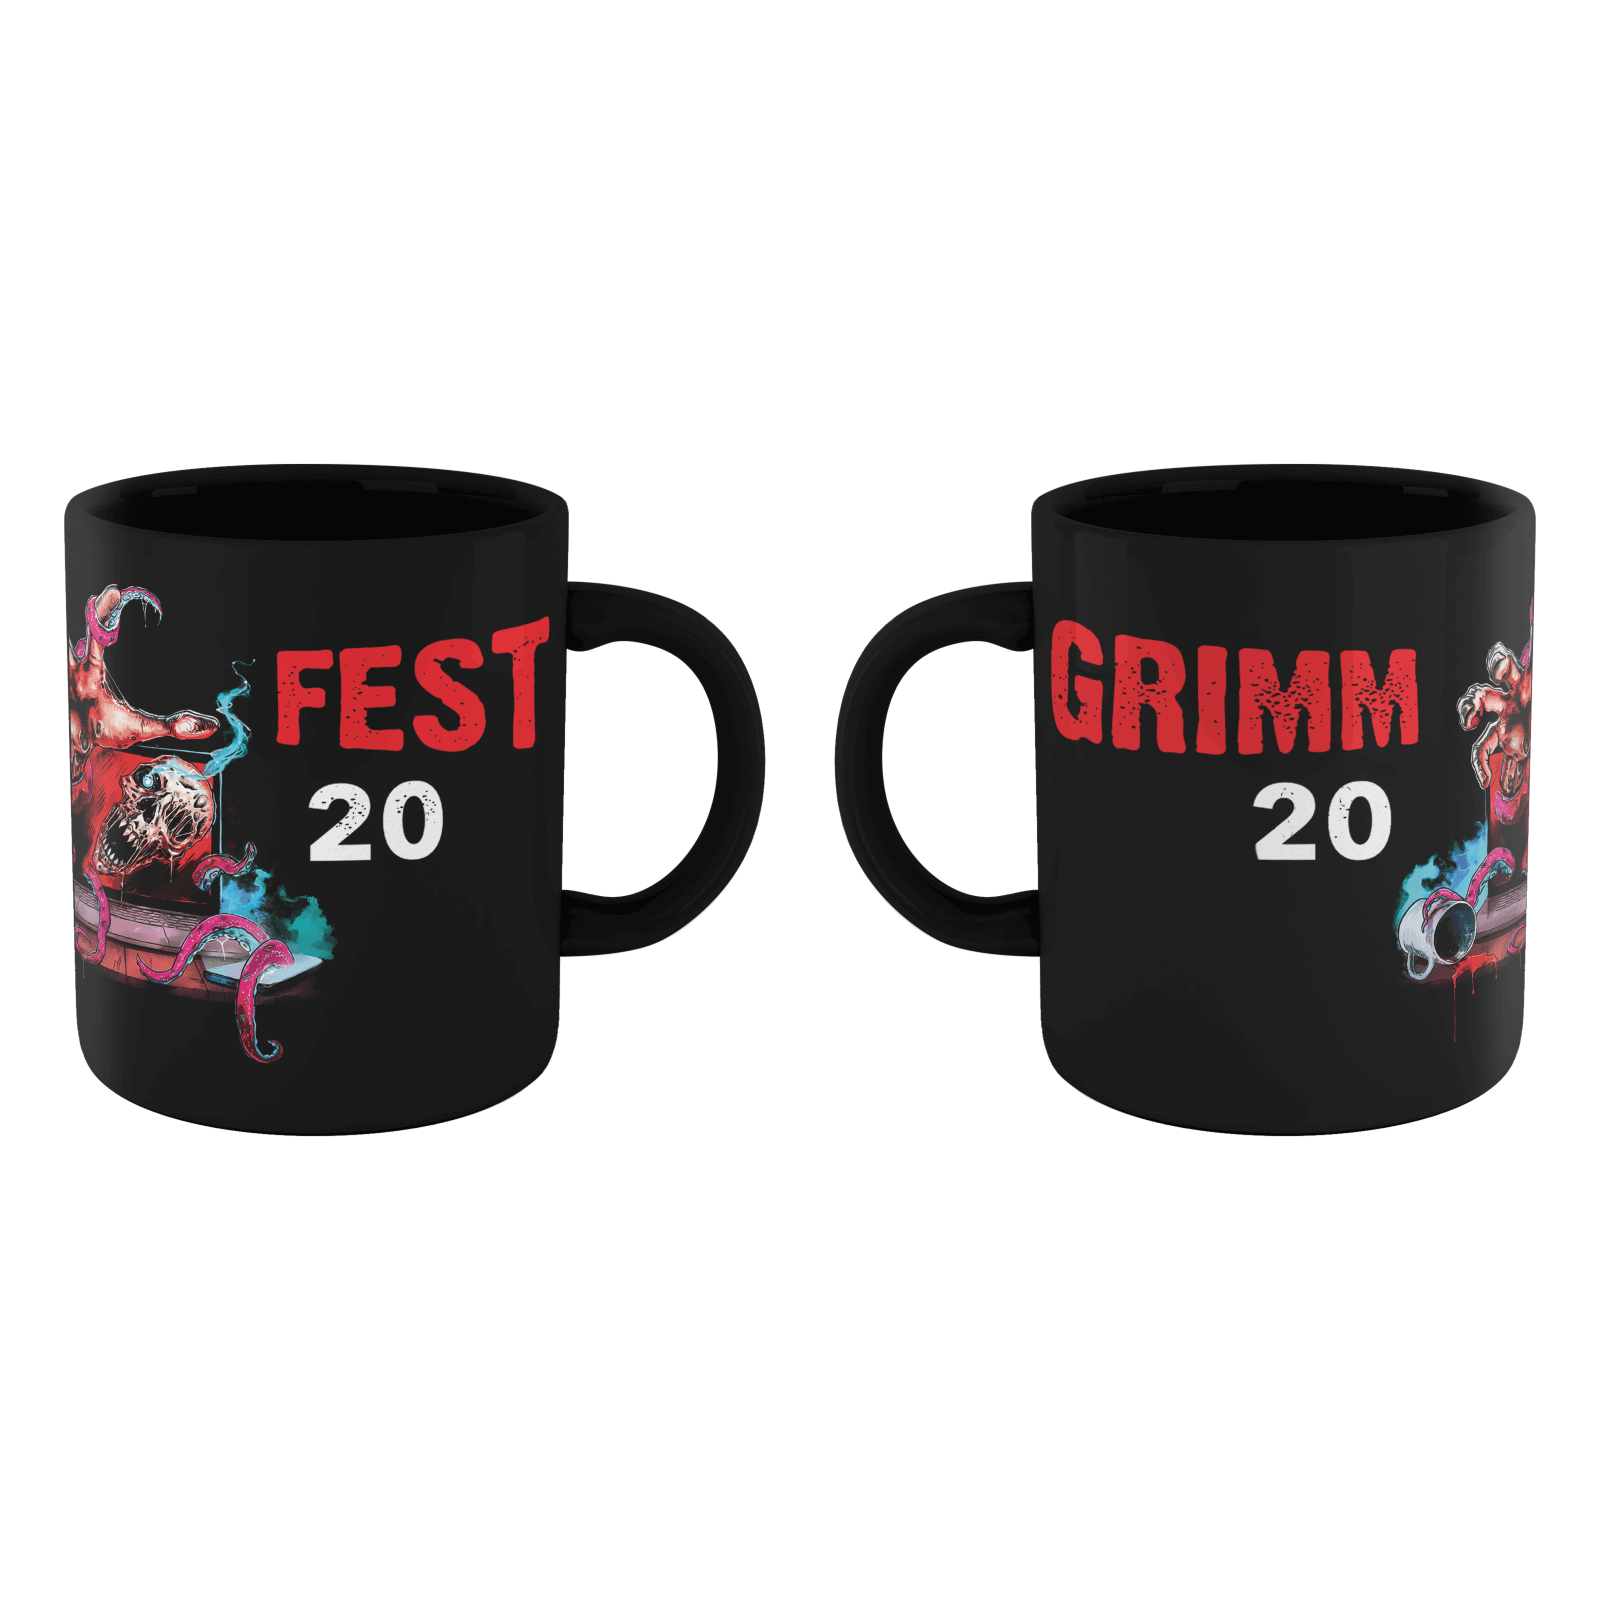 Grimmfest 2020 Mug - Black